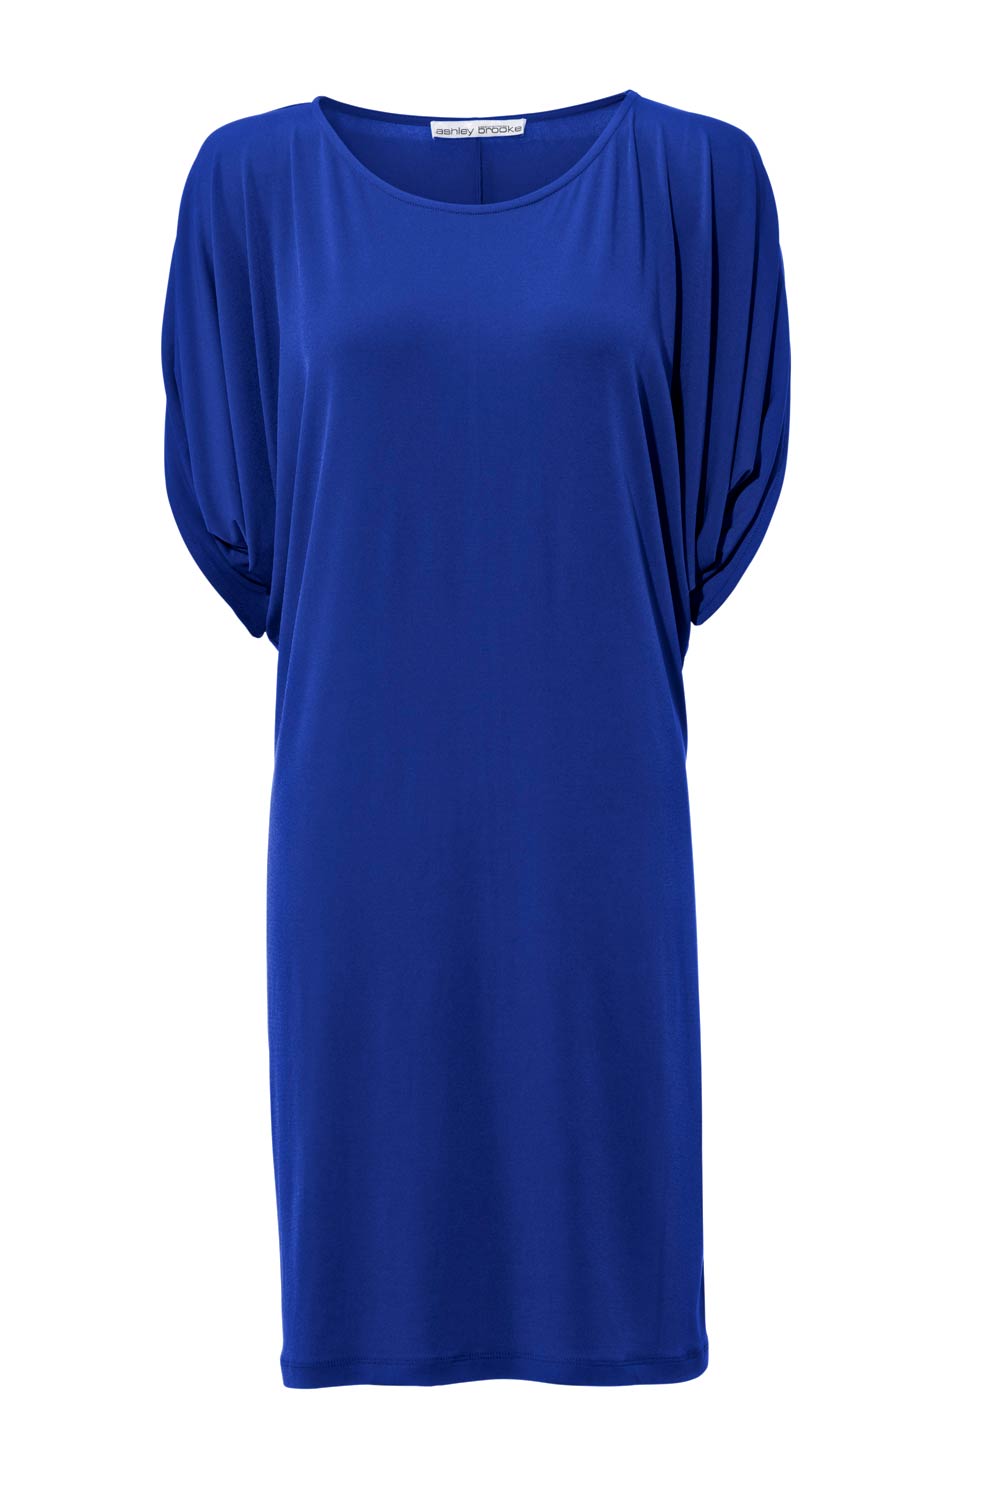 Ashley Brooke Damen Designer-Kleid, royalblau